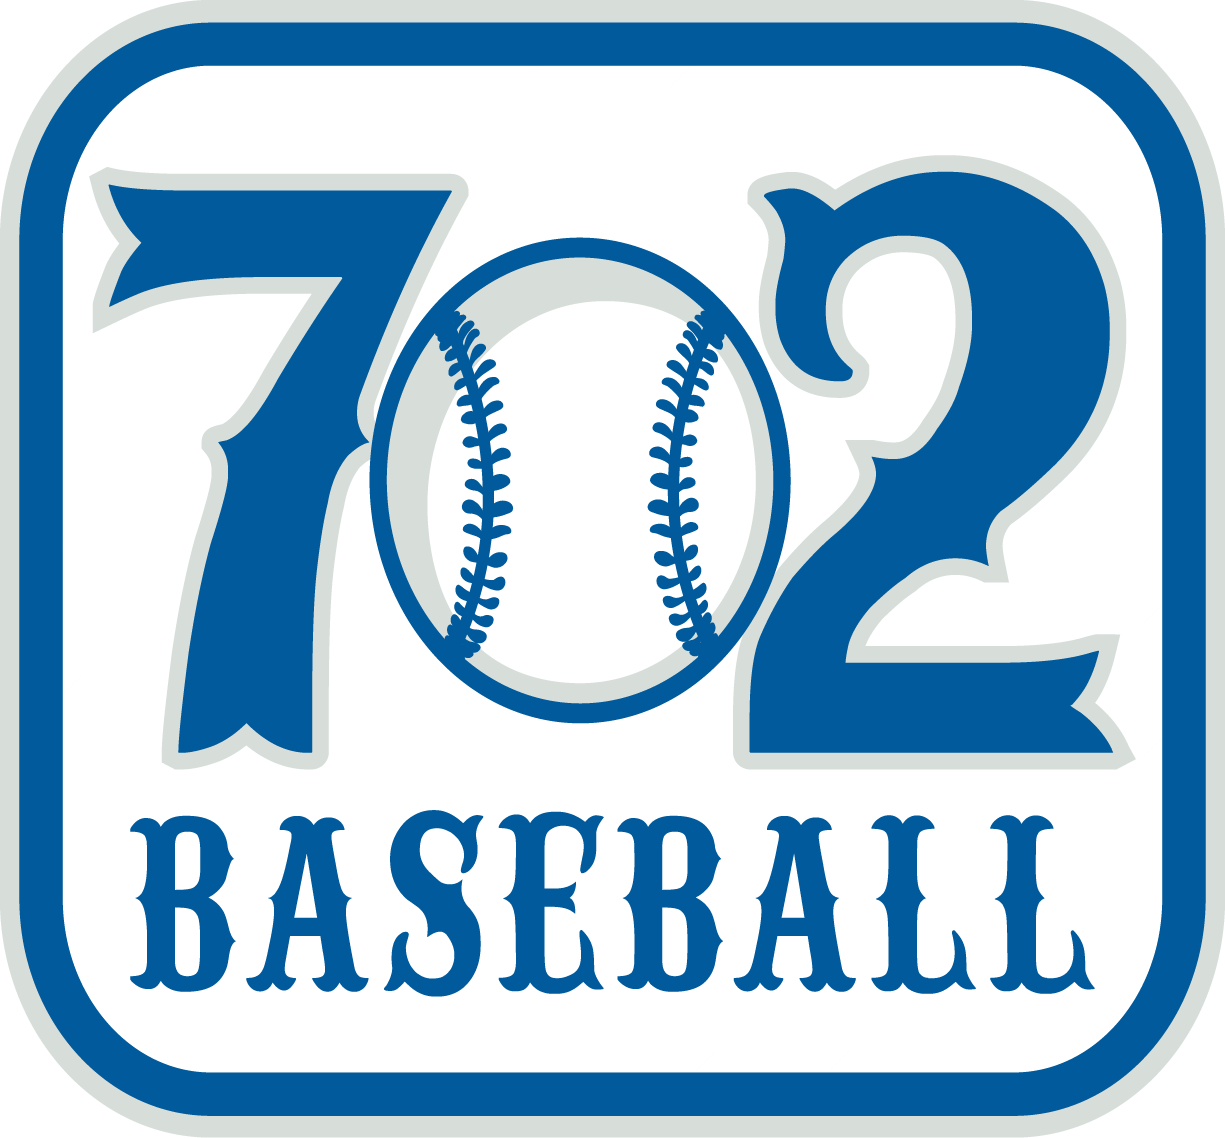 702 Baseball